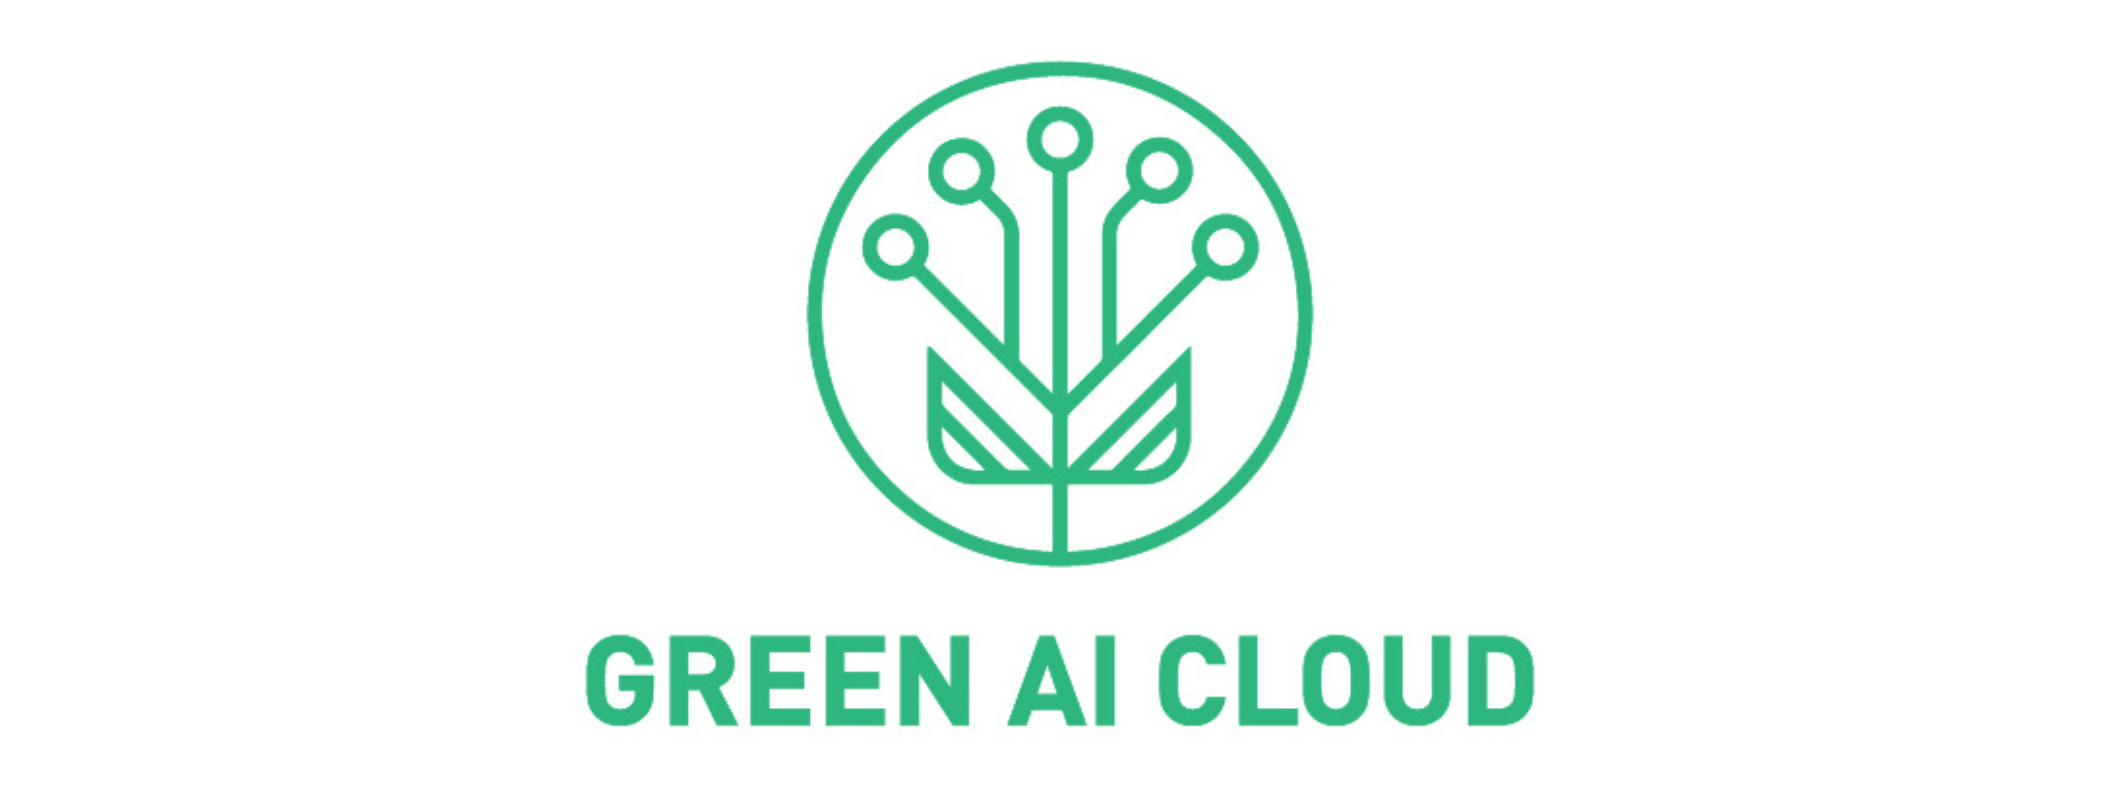 Green AI Cloud